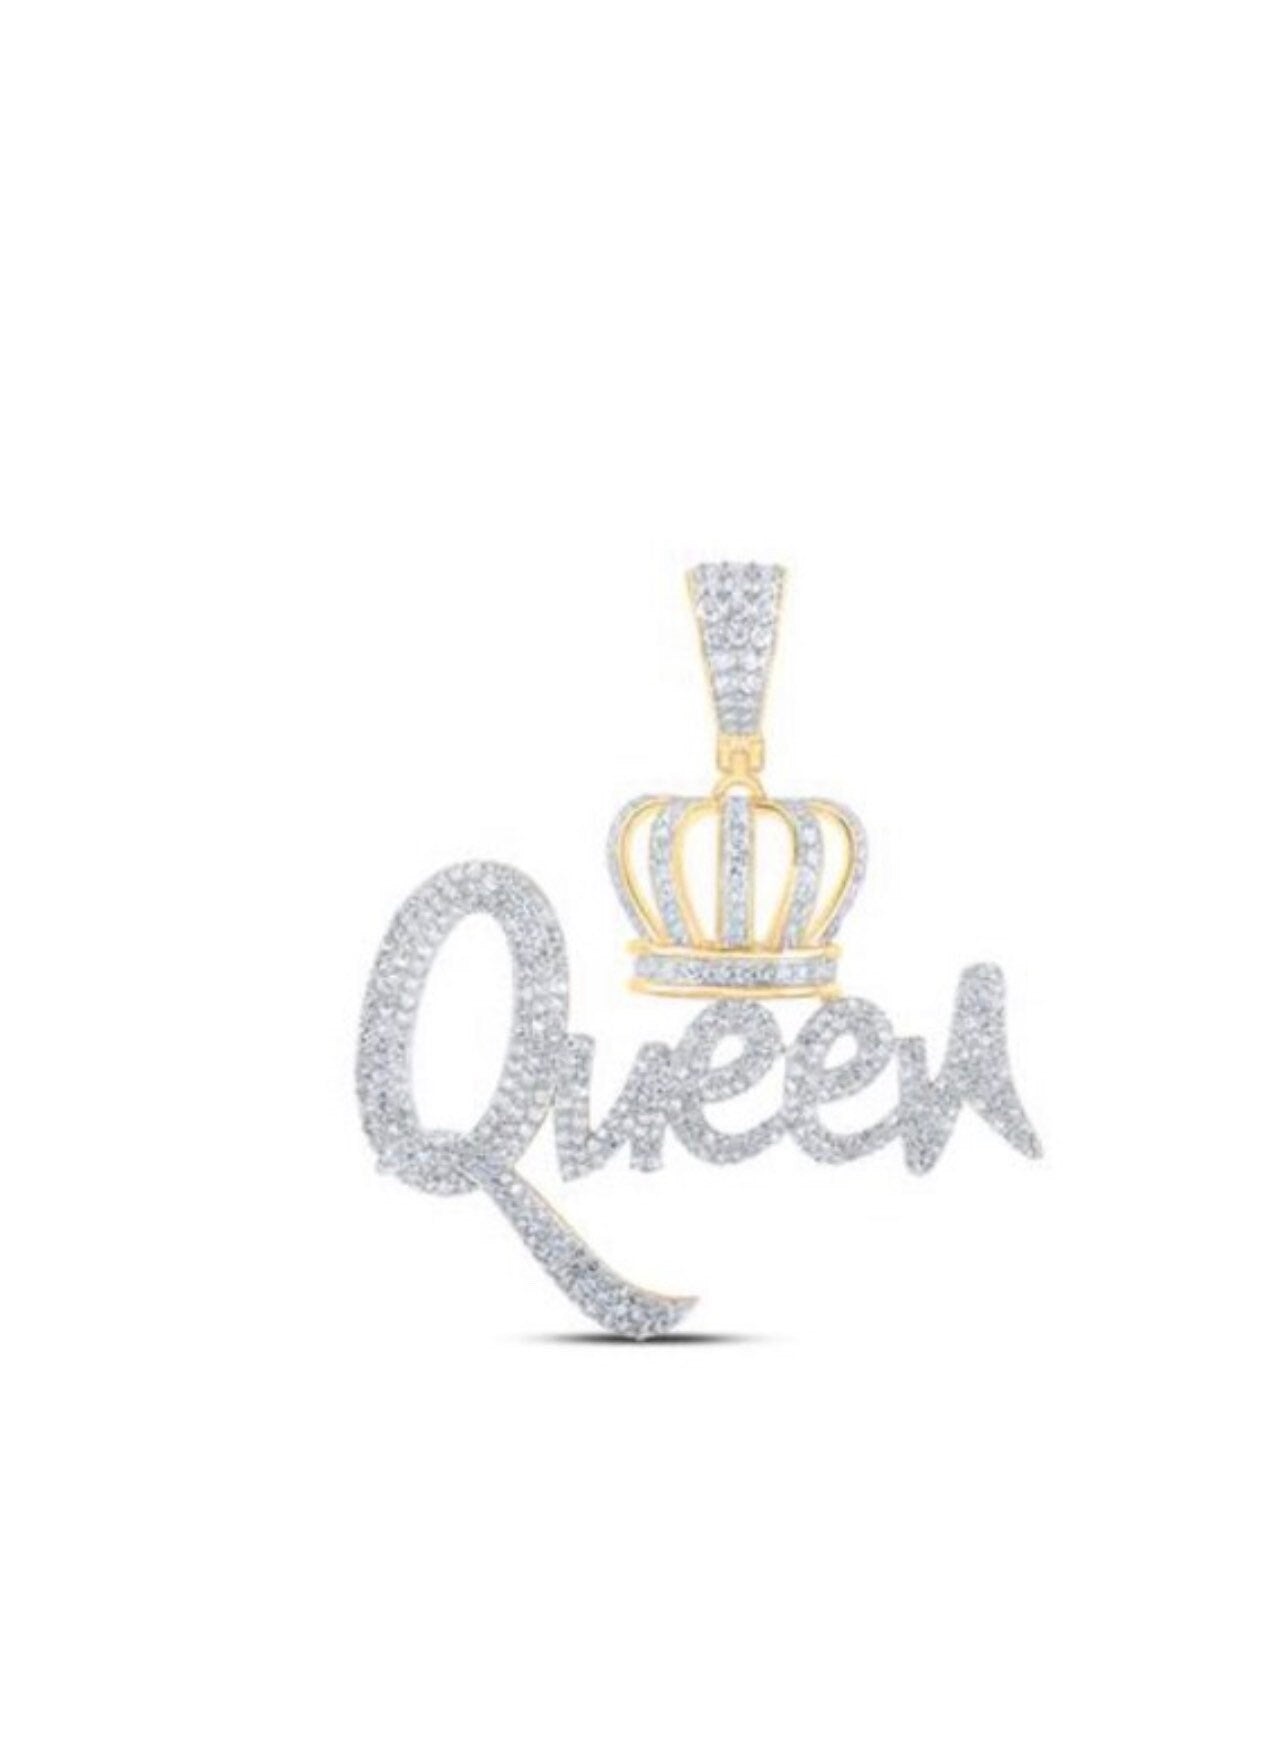 10k Gold Vermeil Real Diamond Queen Pendant, 100% Genuine Natural Diamond Gift For Women, Christmas’s Day Gift, Gift for Her, 925 Diamond